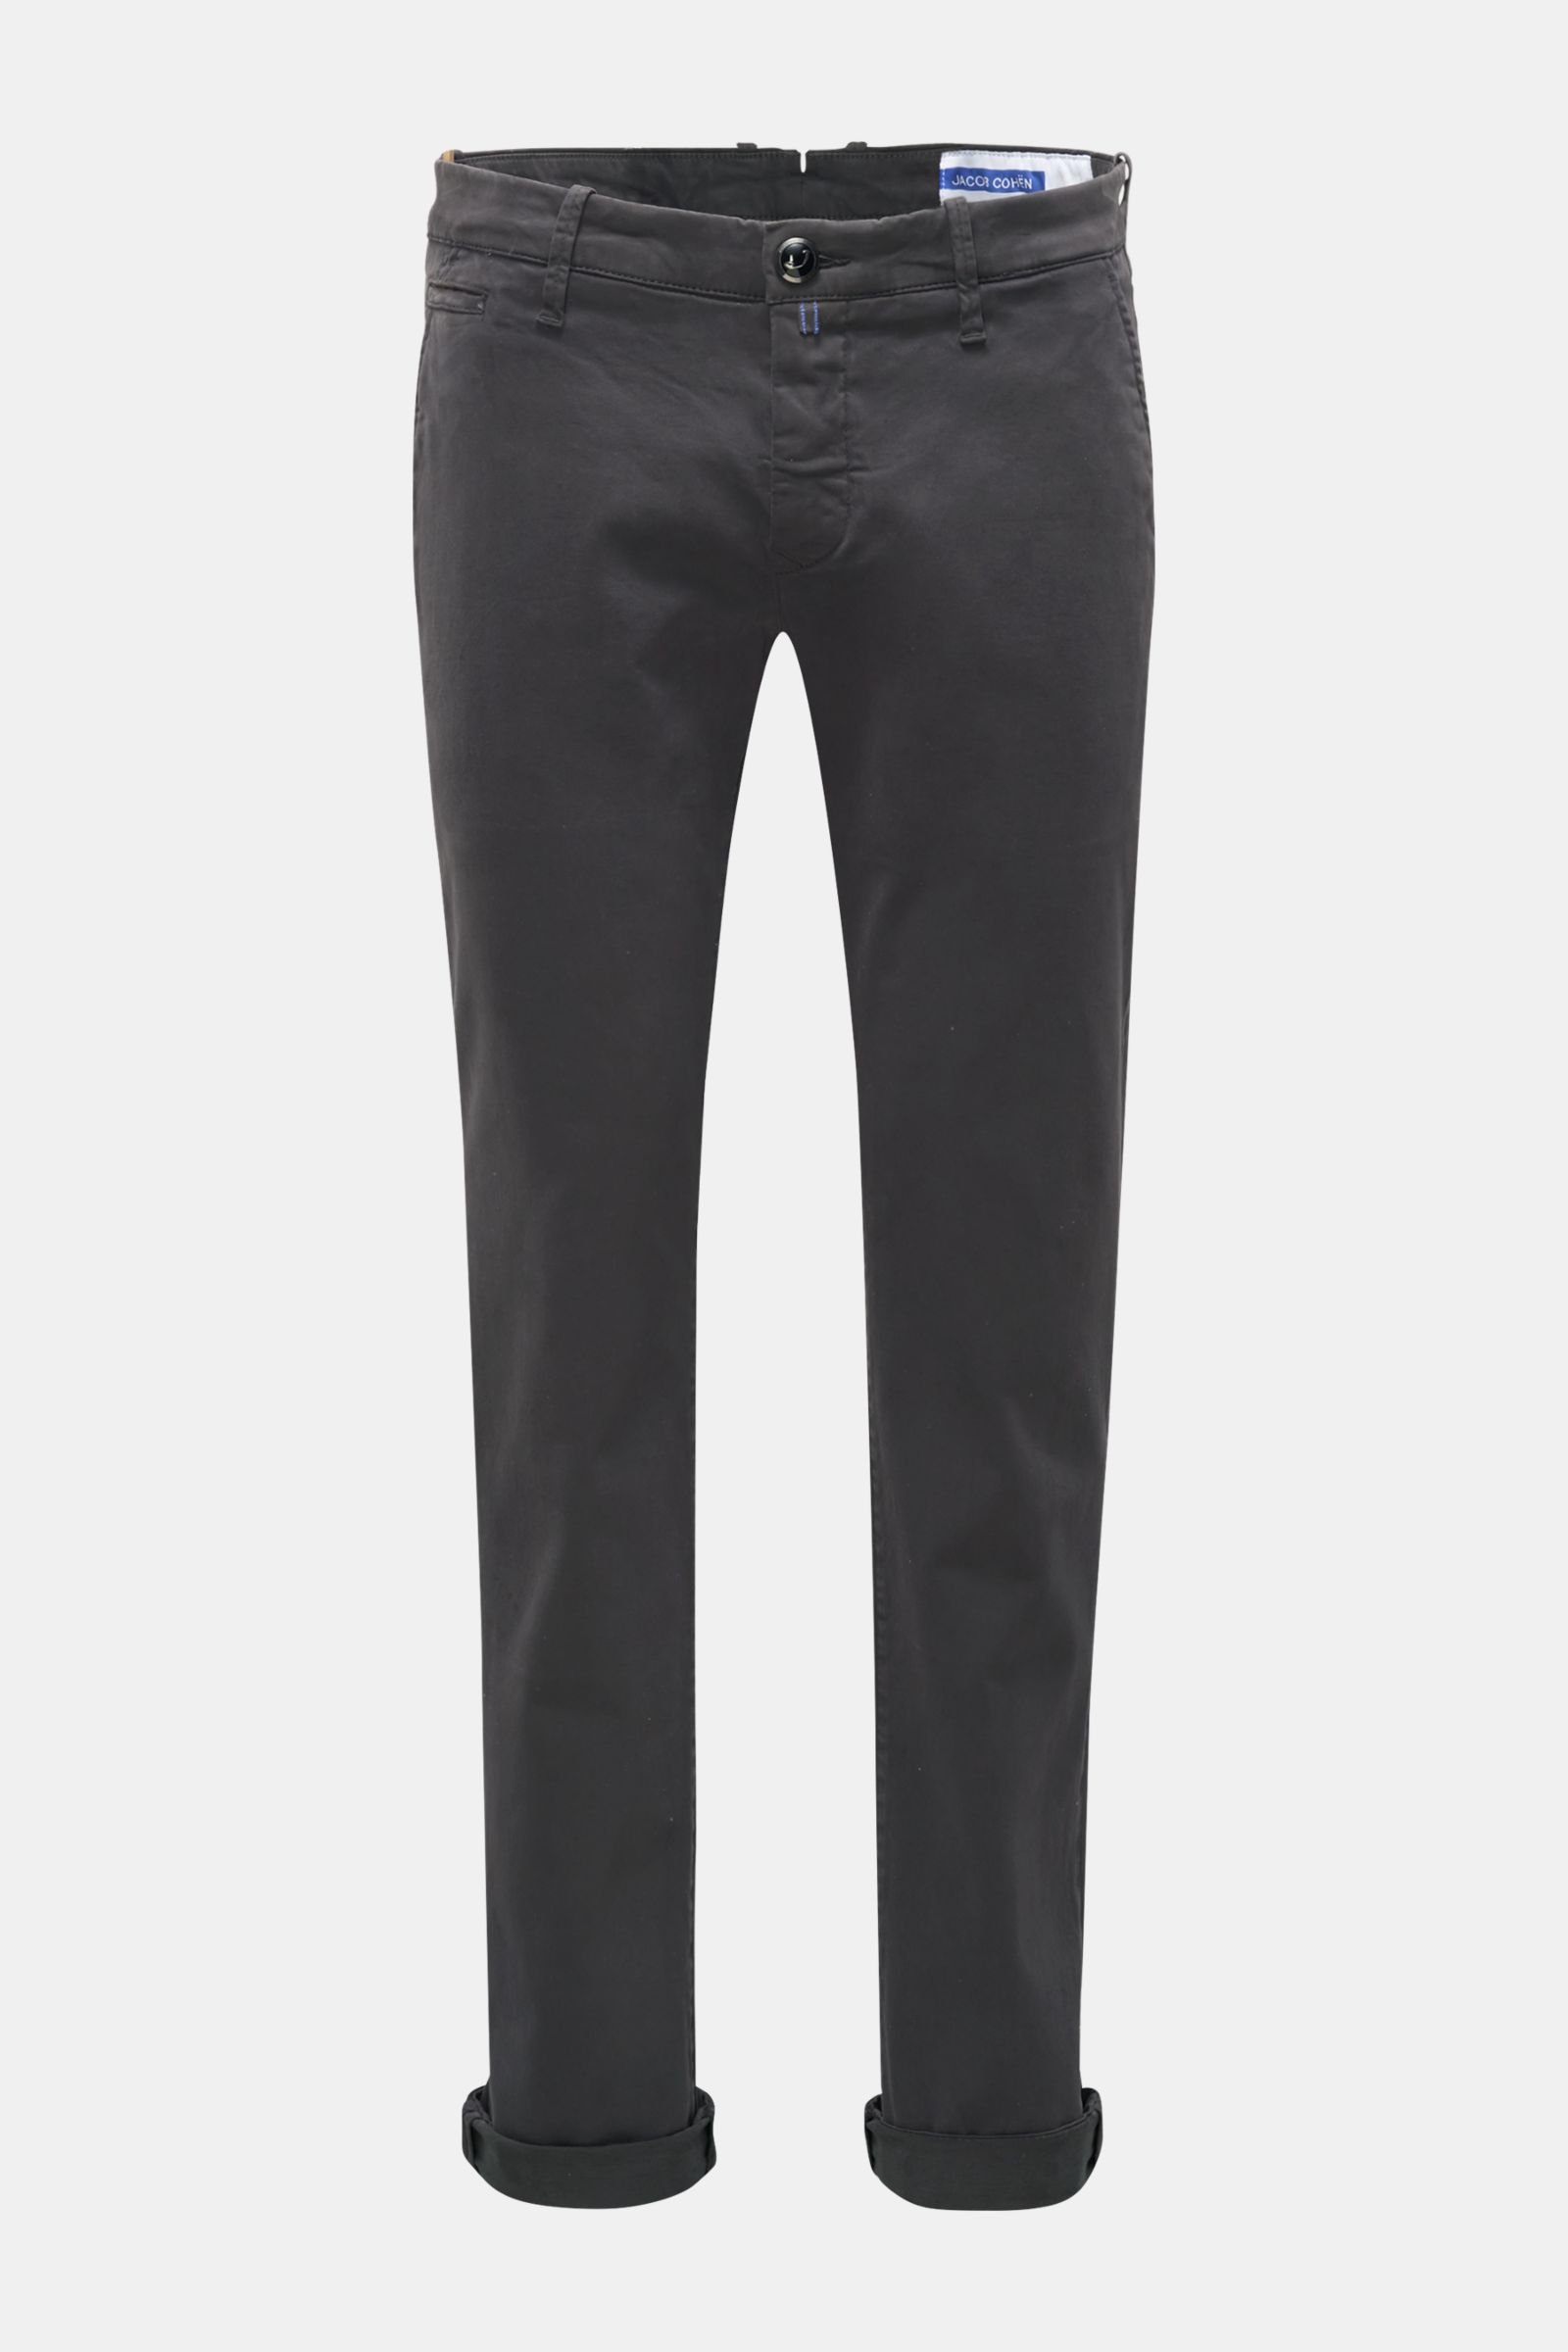 Fustian trousers 'Bobby' dark grey